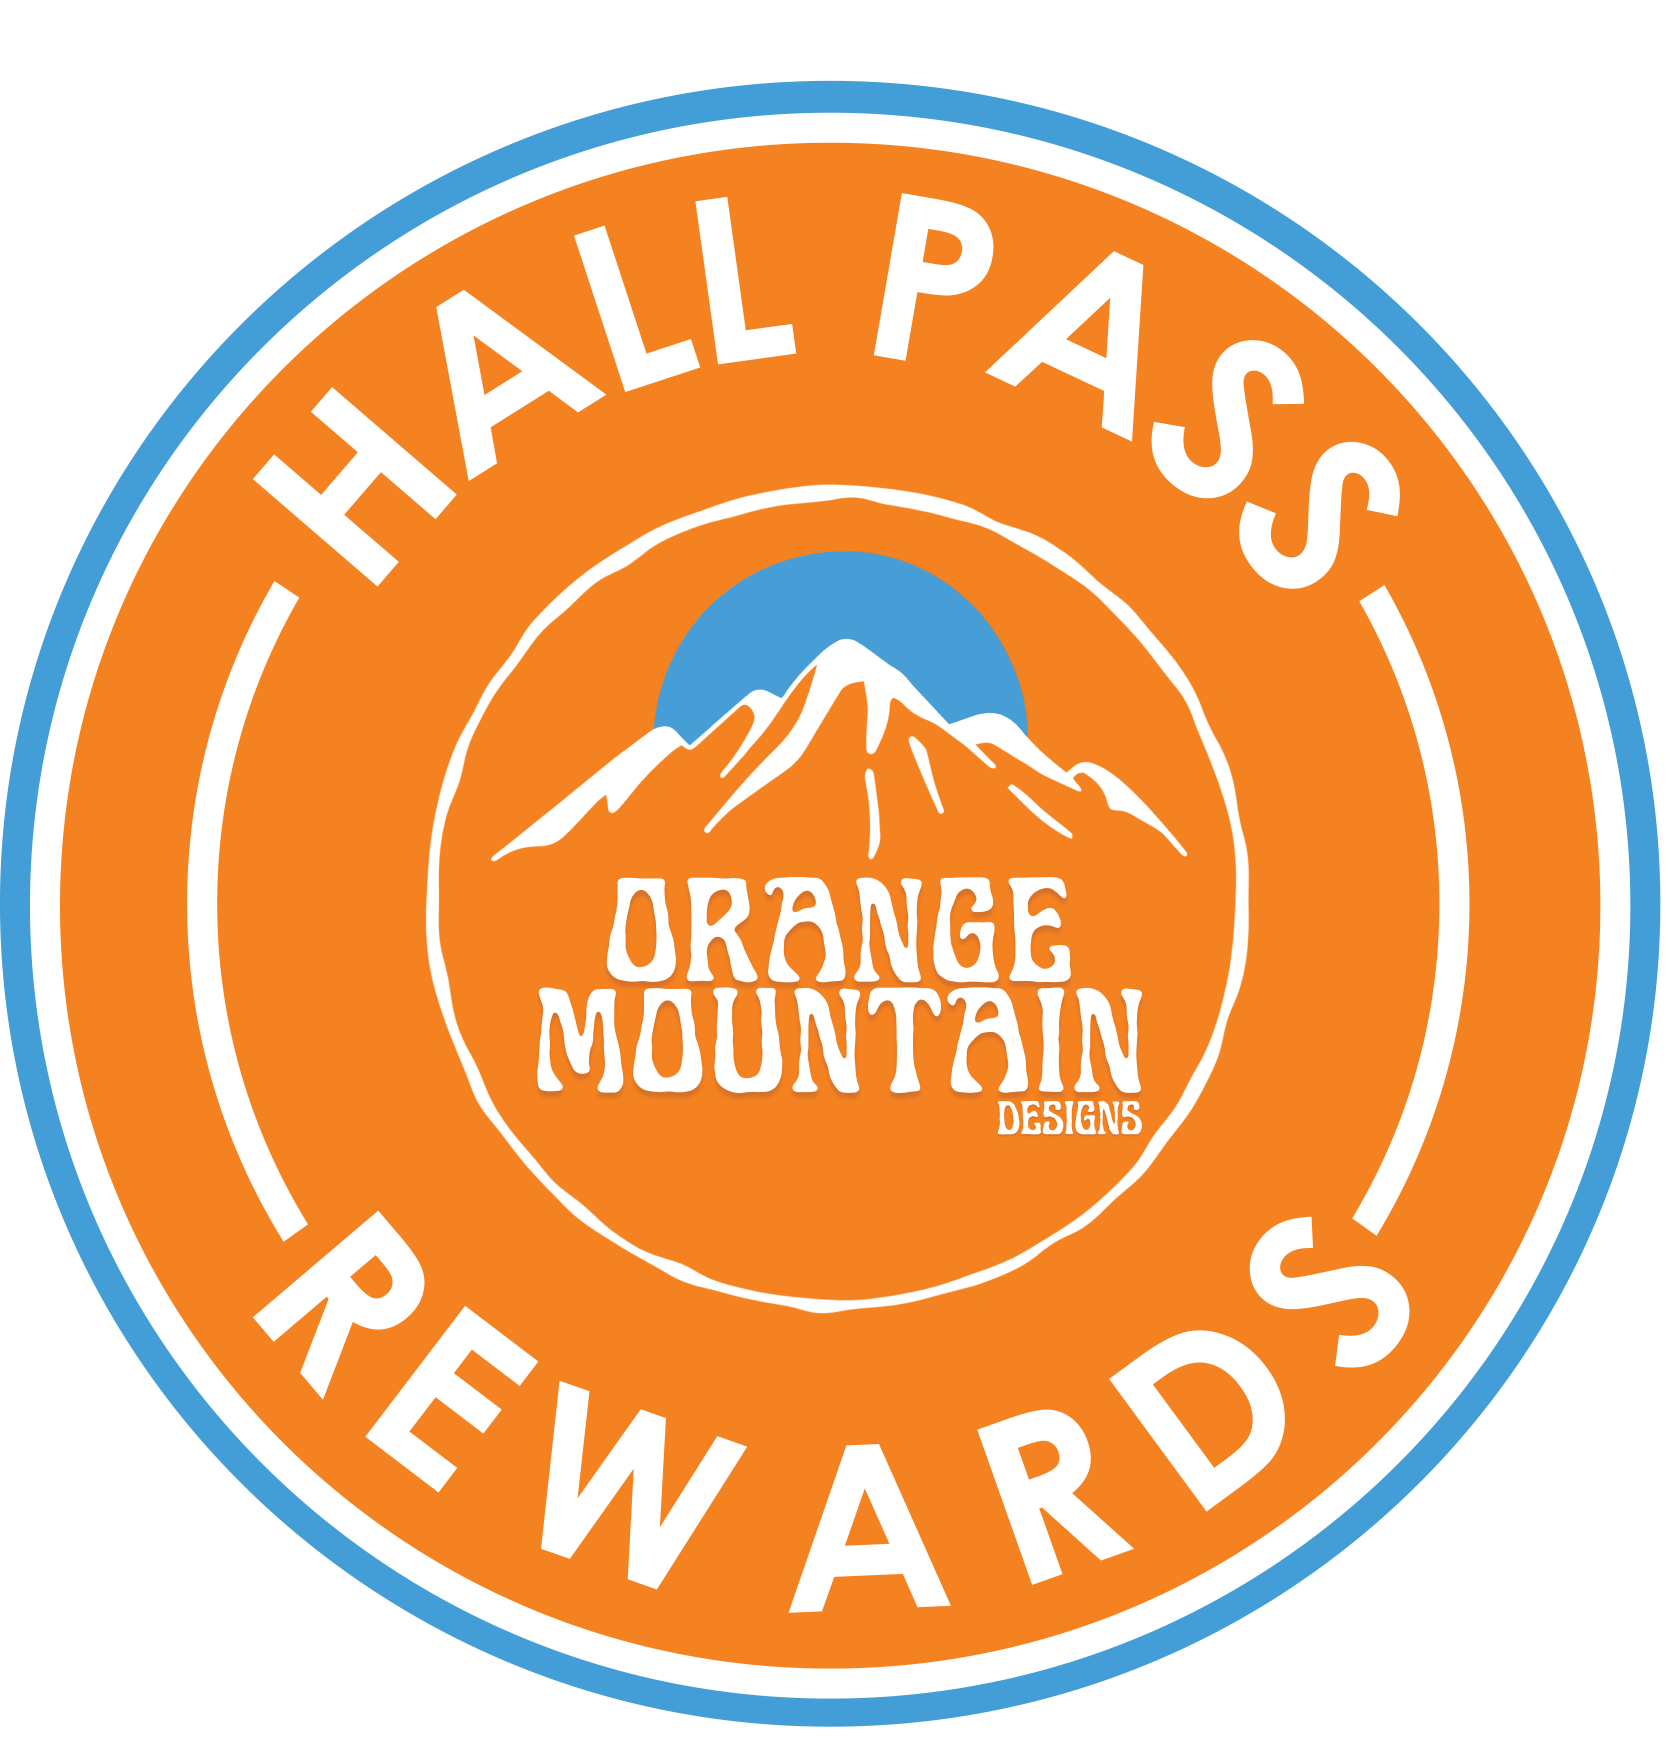 the lodge hall pass rewards